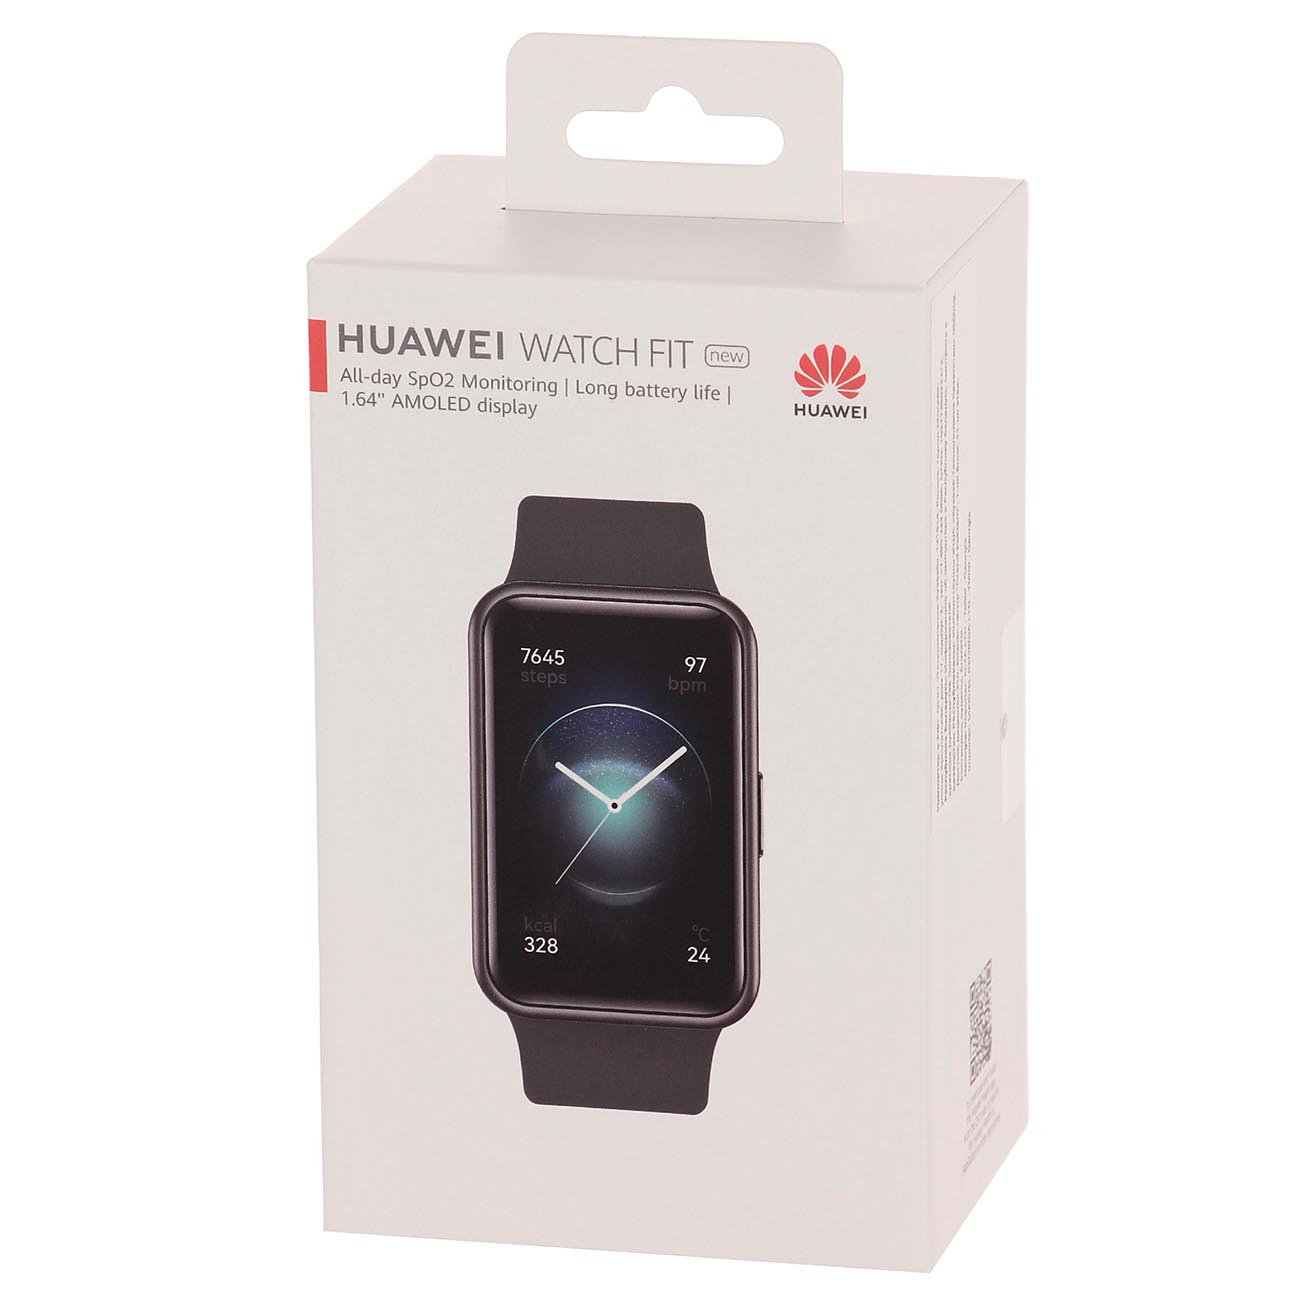 Смарт часы huawei tia b09. Смарт часы Хуавей фит Tia b09. Huawei watch Fit New Graphite Black (Tia-b09). Huawei Tia-b09 смарт-часы. Смарт-часы Huawei watch Fit Graphite Black (Tia-b09).